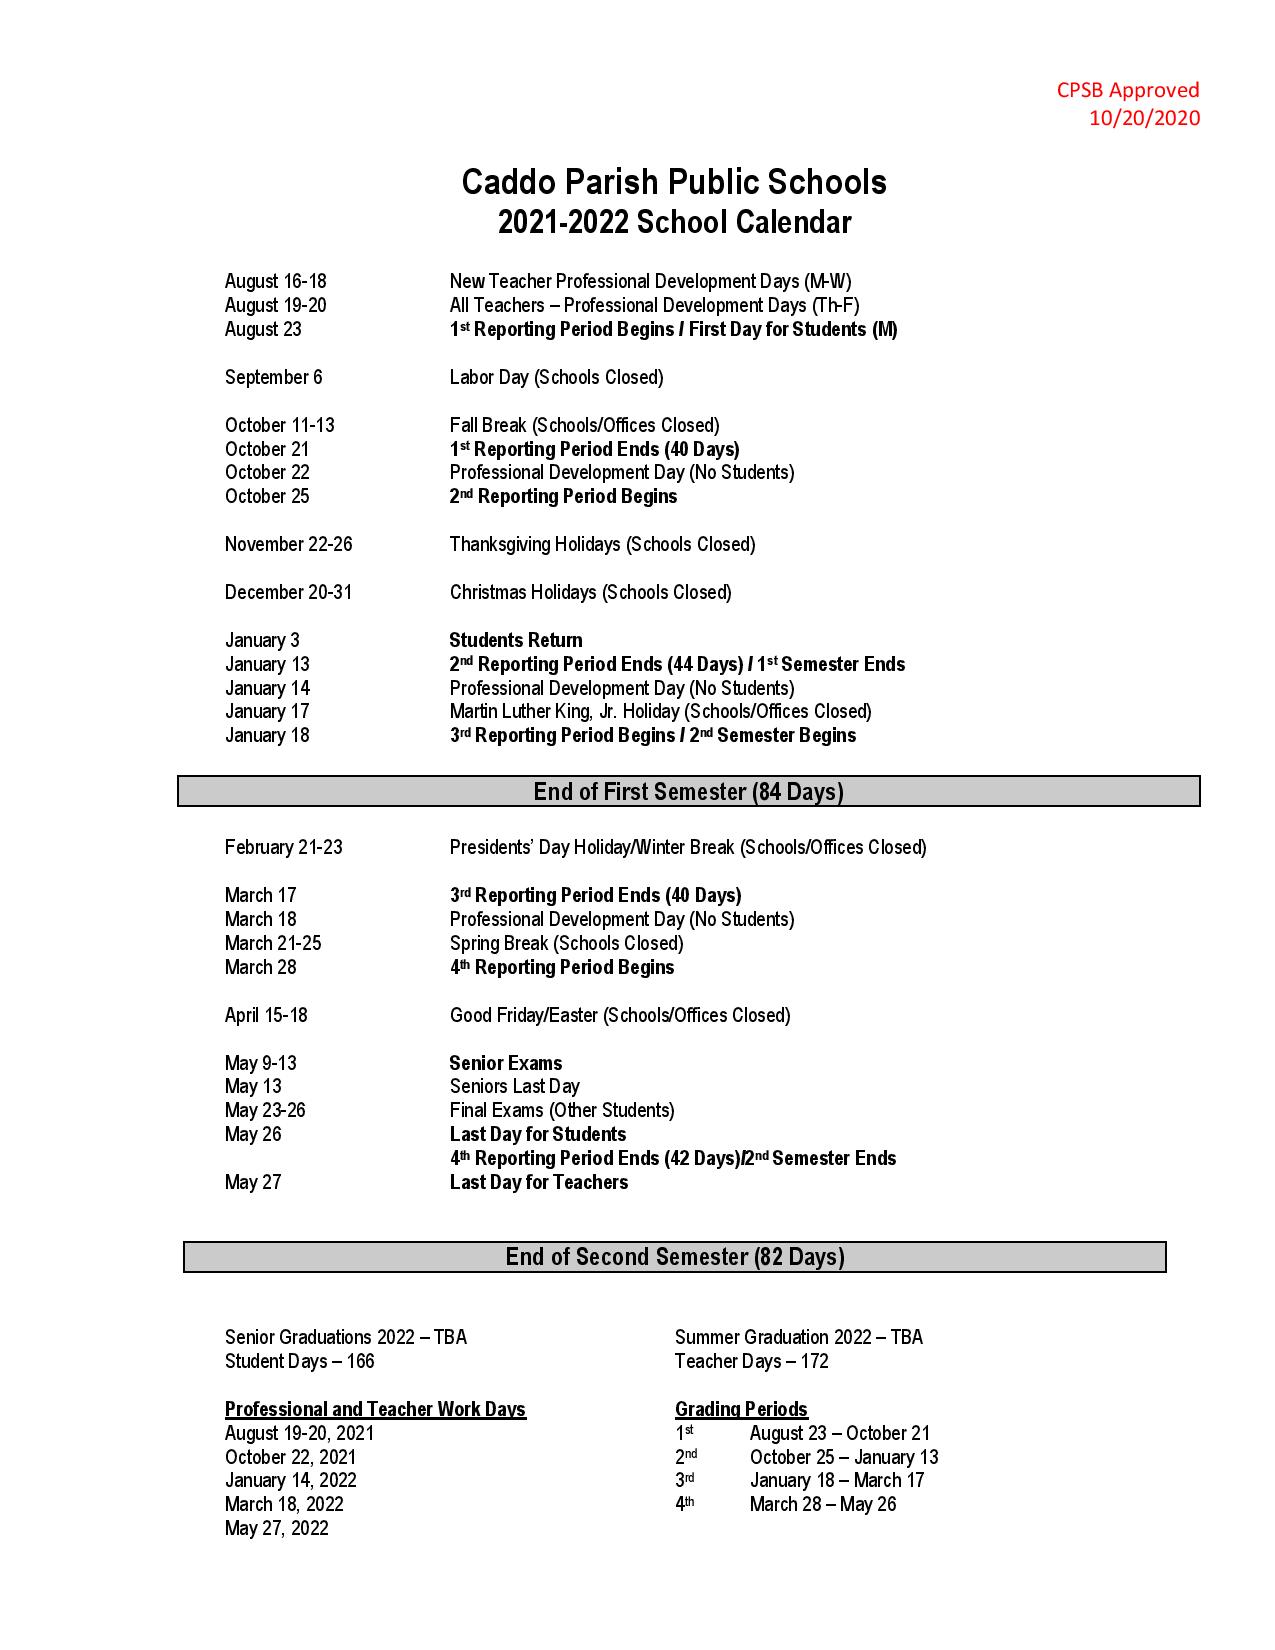 Caddo Schools Calendar 202223